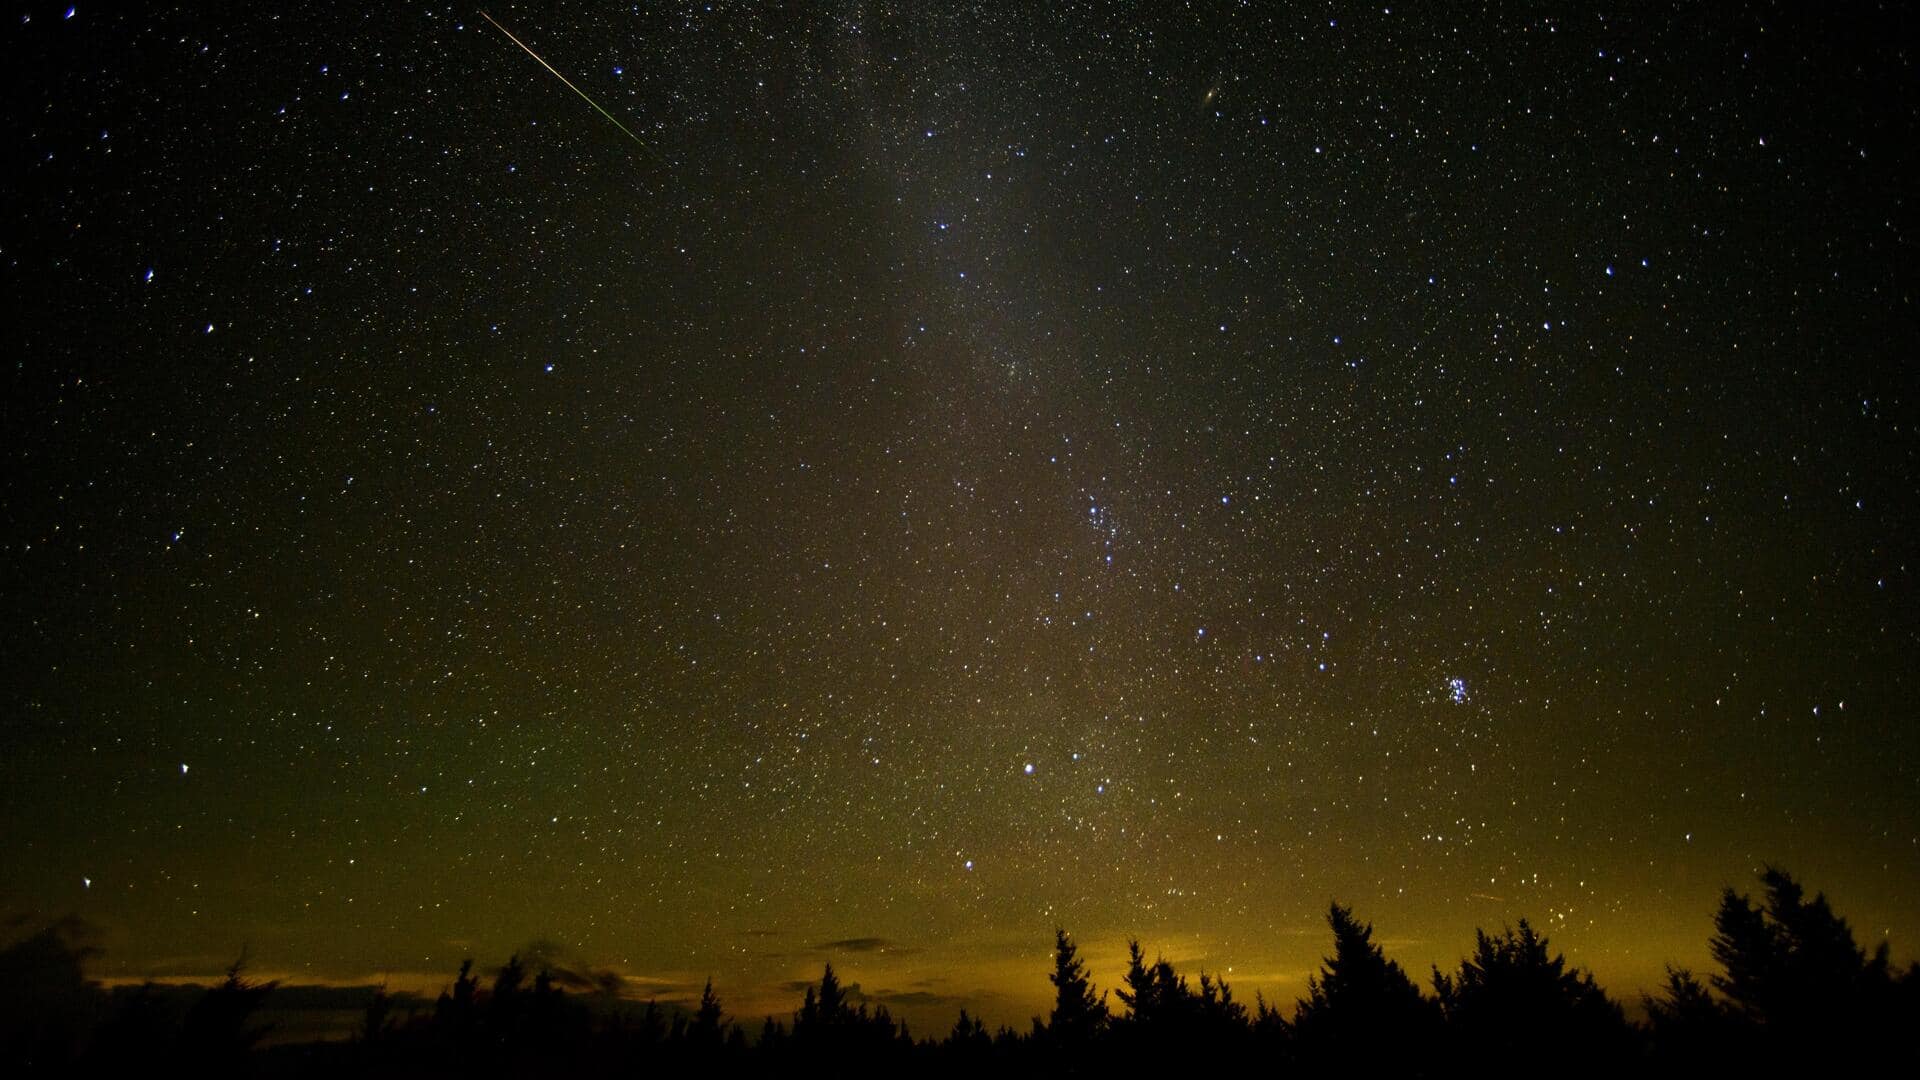 Perseid meteor shower peaks tonight: How to watch 